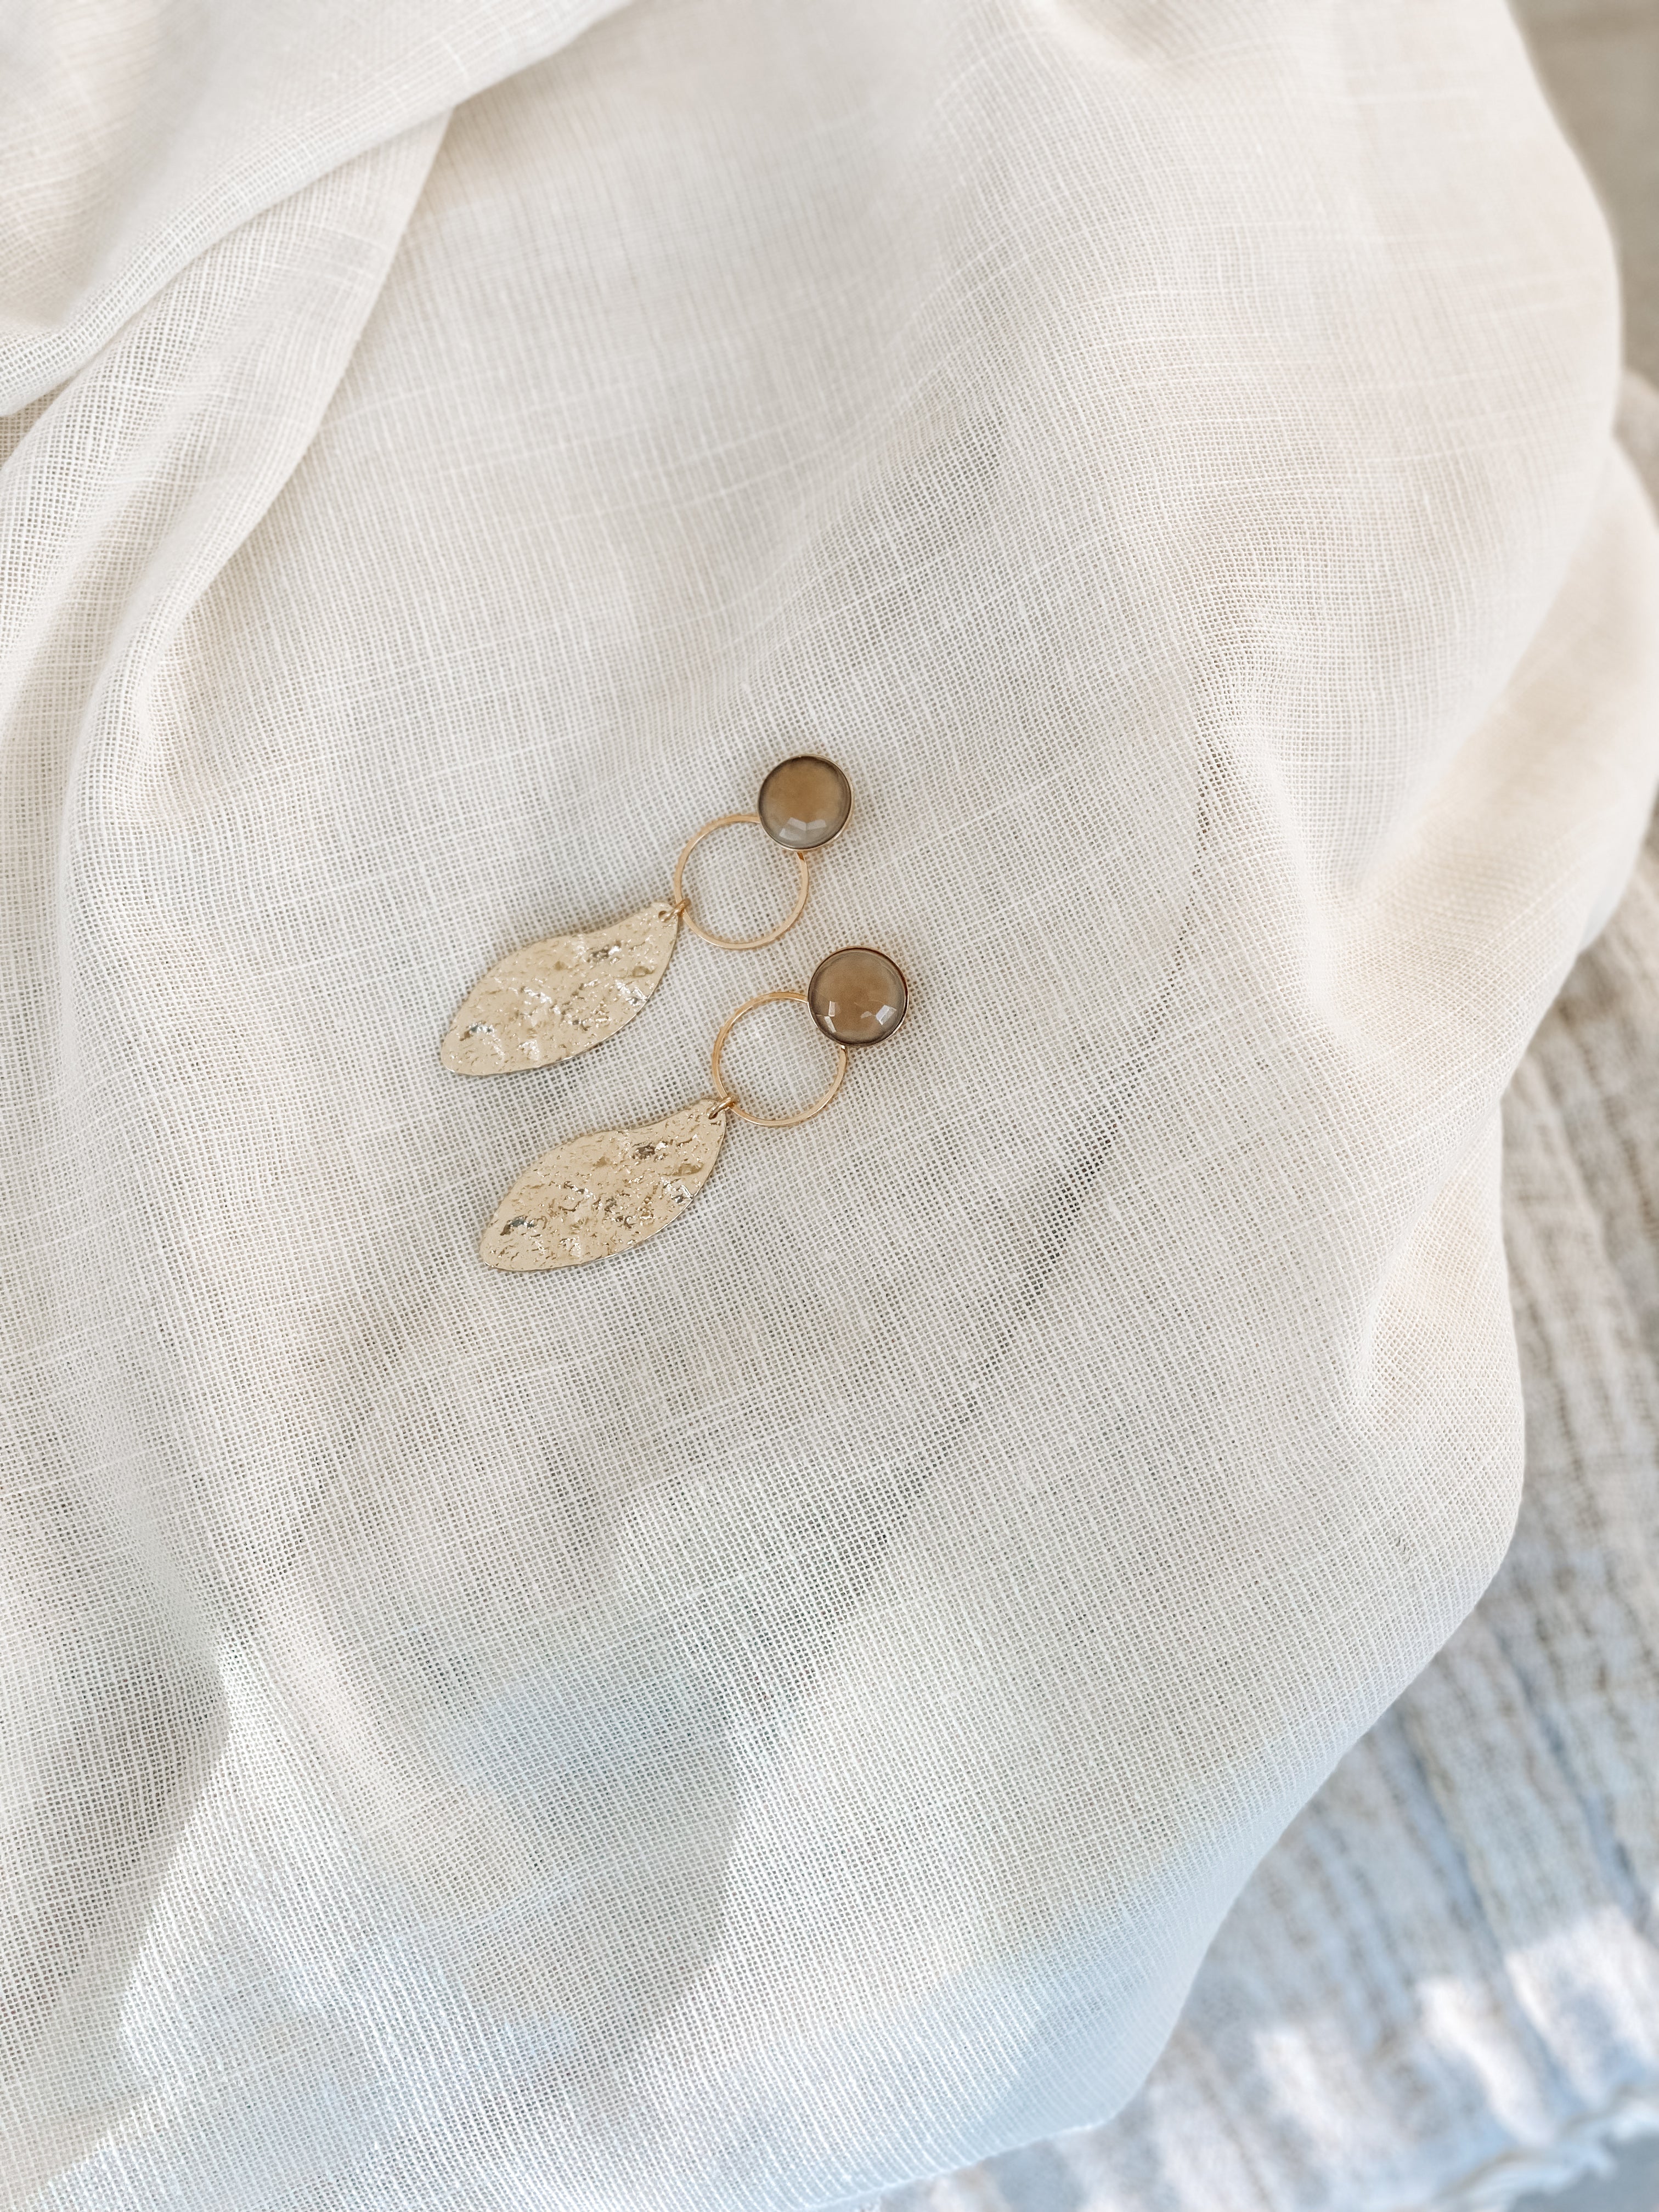 houla gold - petit bonbon - statement earrings